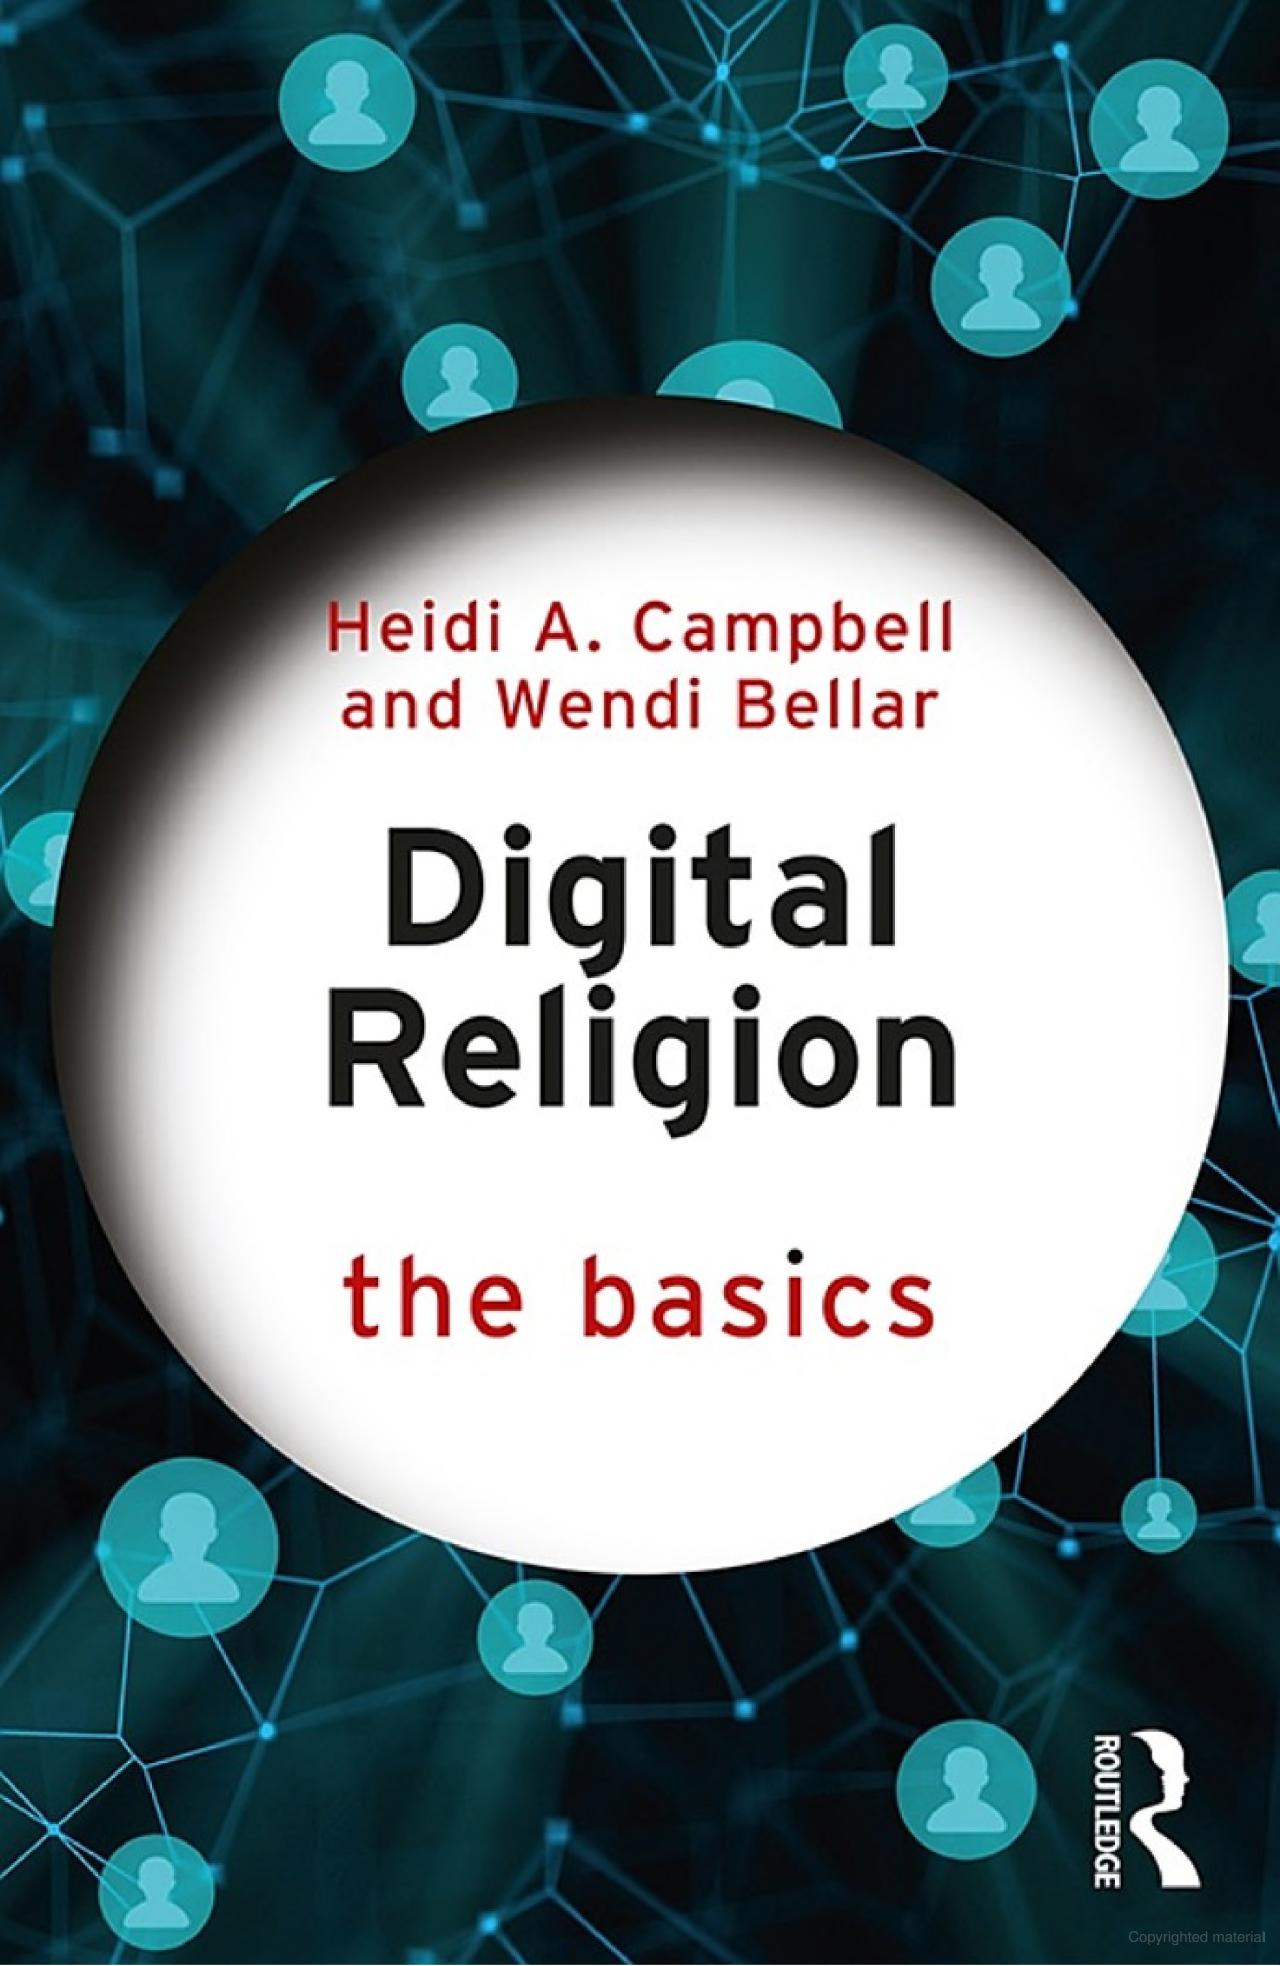 Digital Religion The Basics (1)